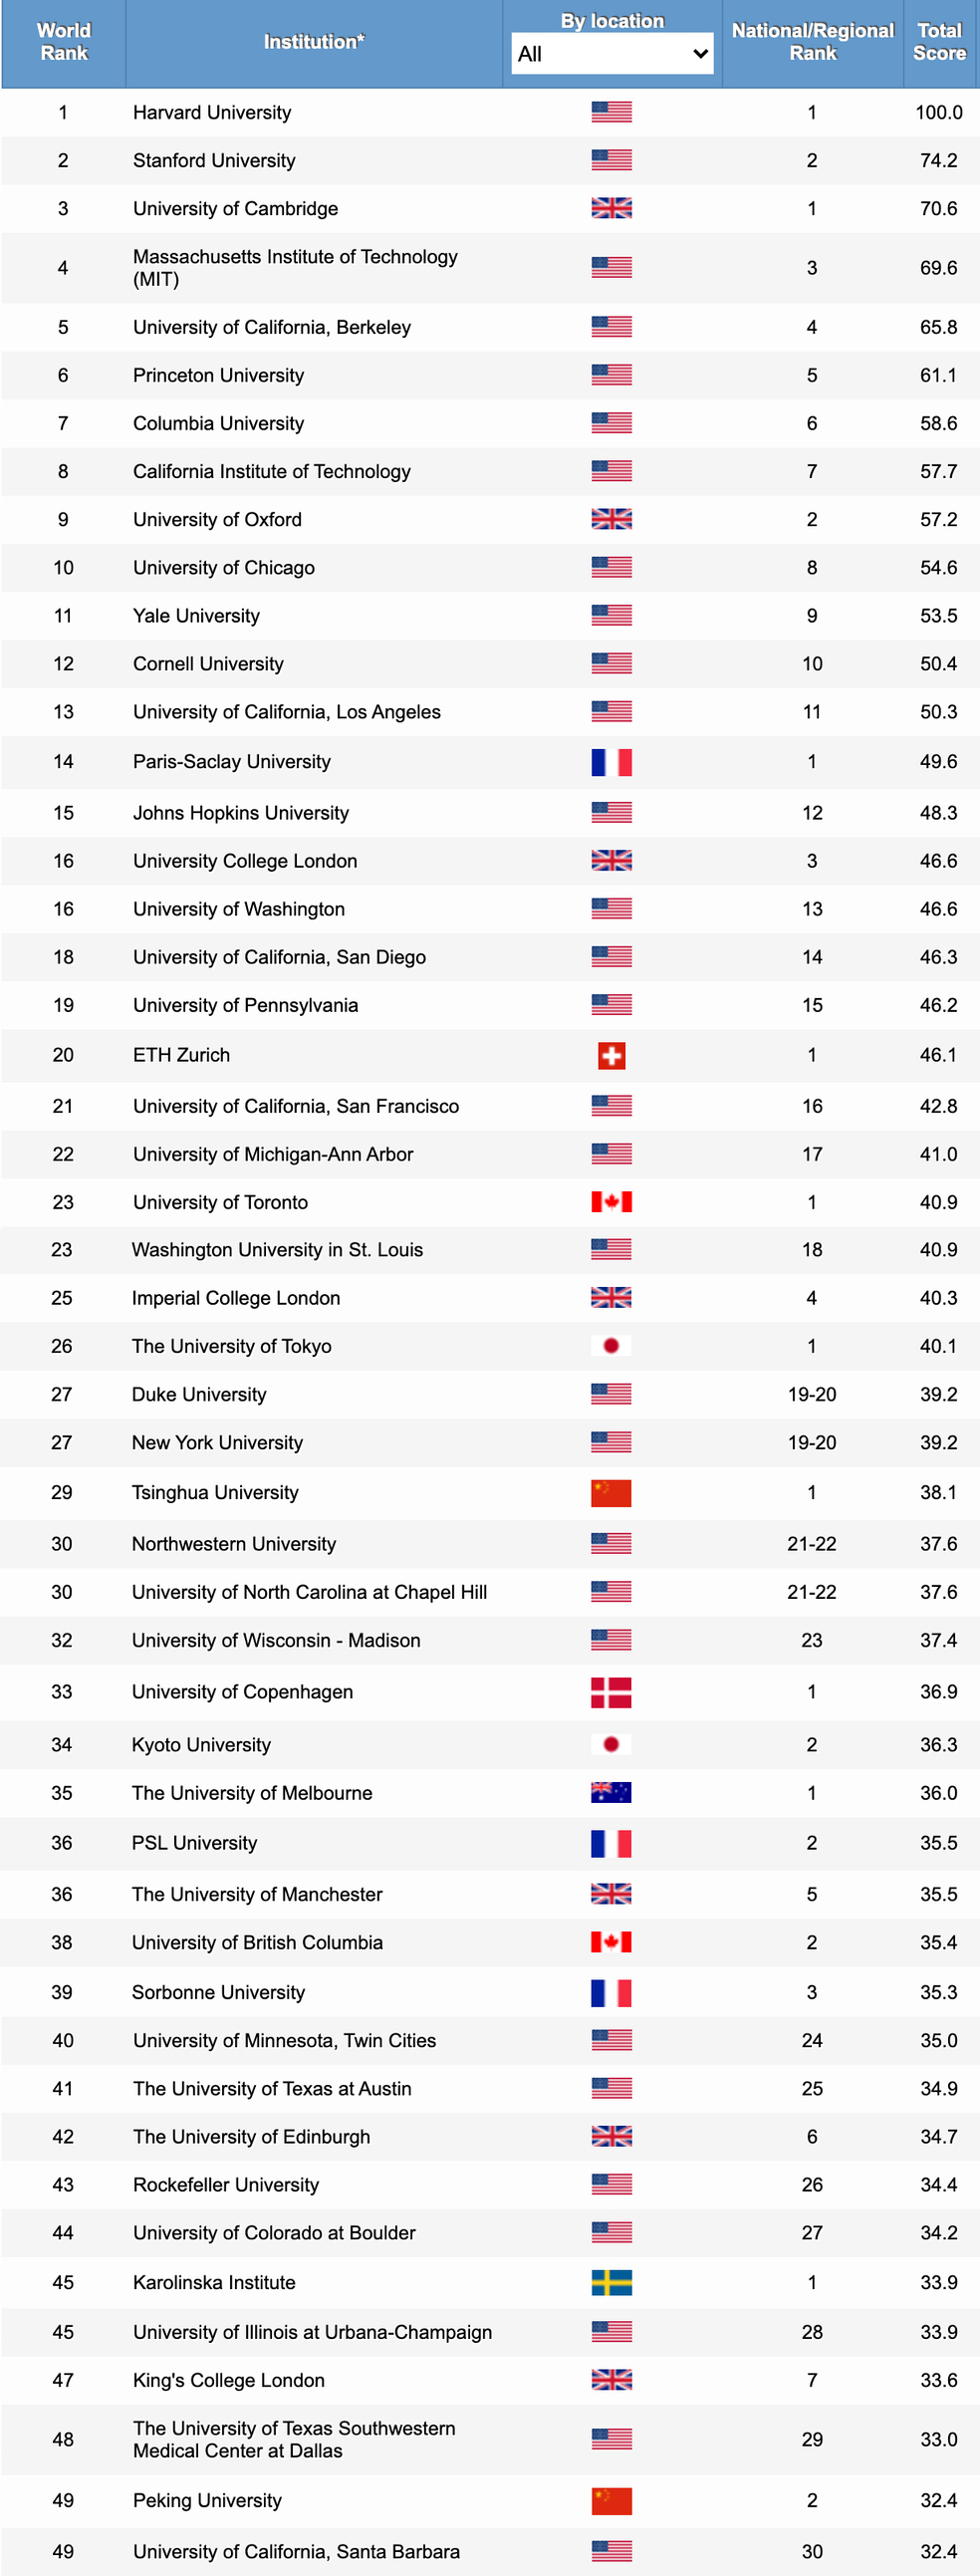 Chinese universities gain rankings of world's top schools -